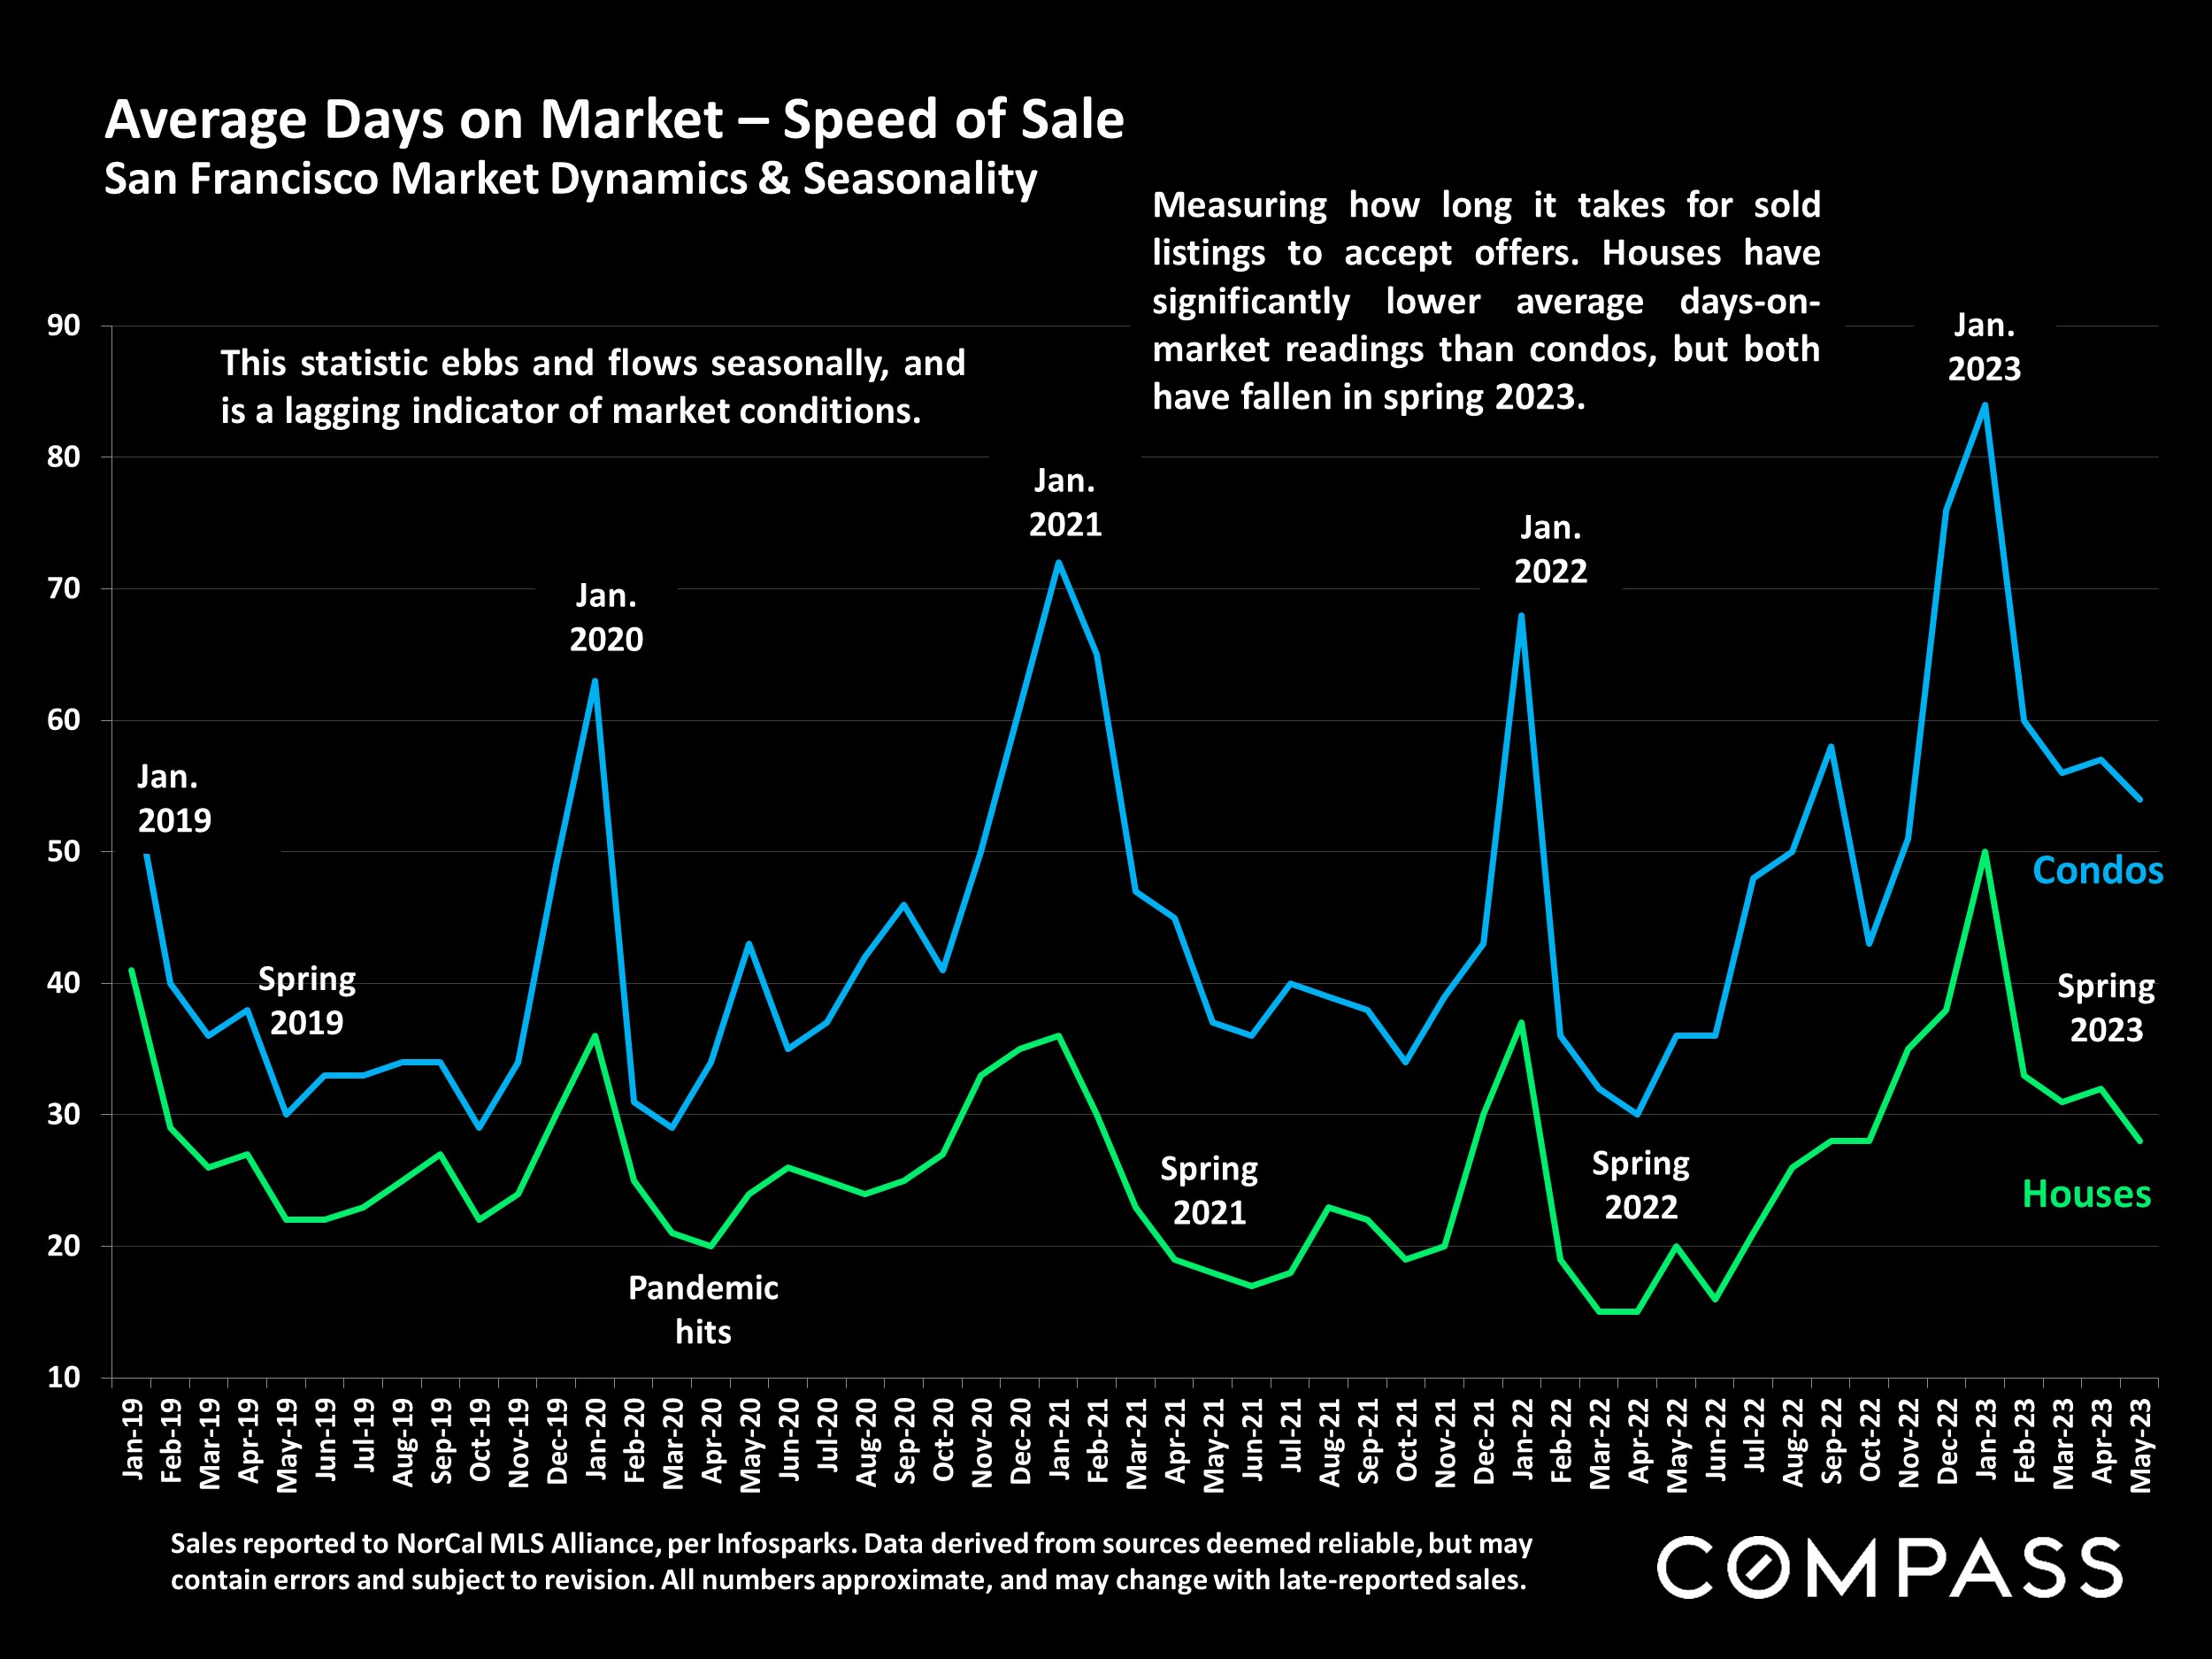 Average Days on Market - Speed of Sale